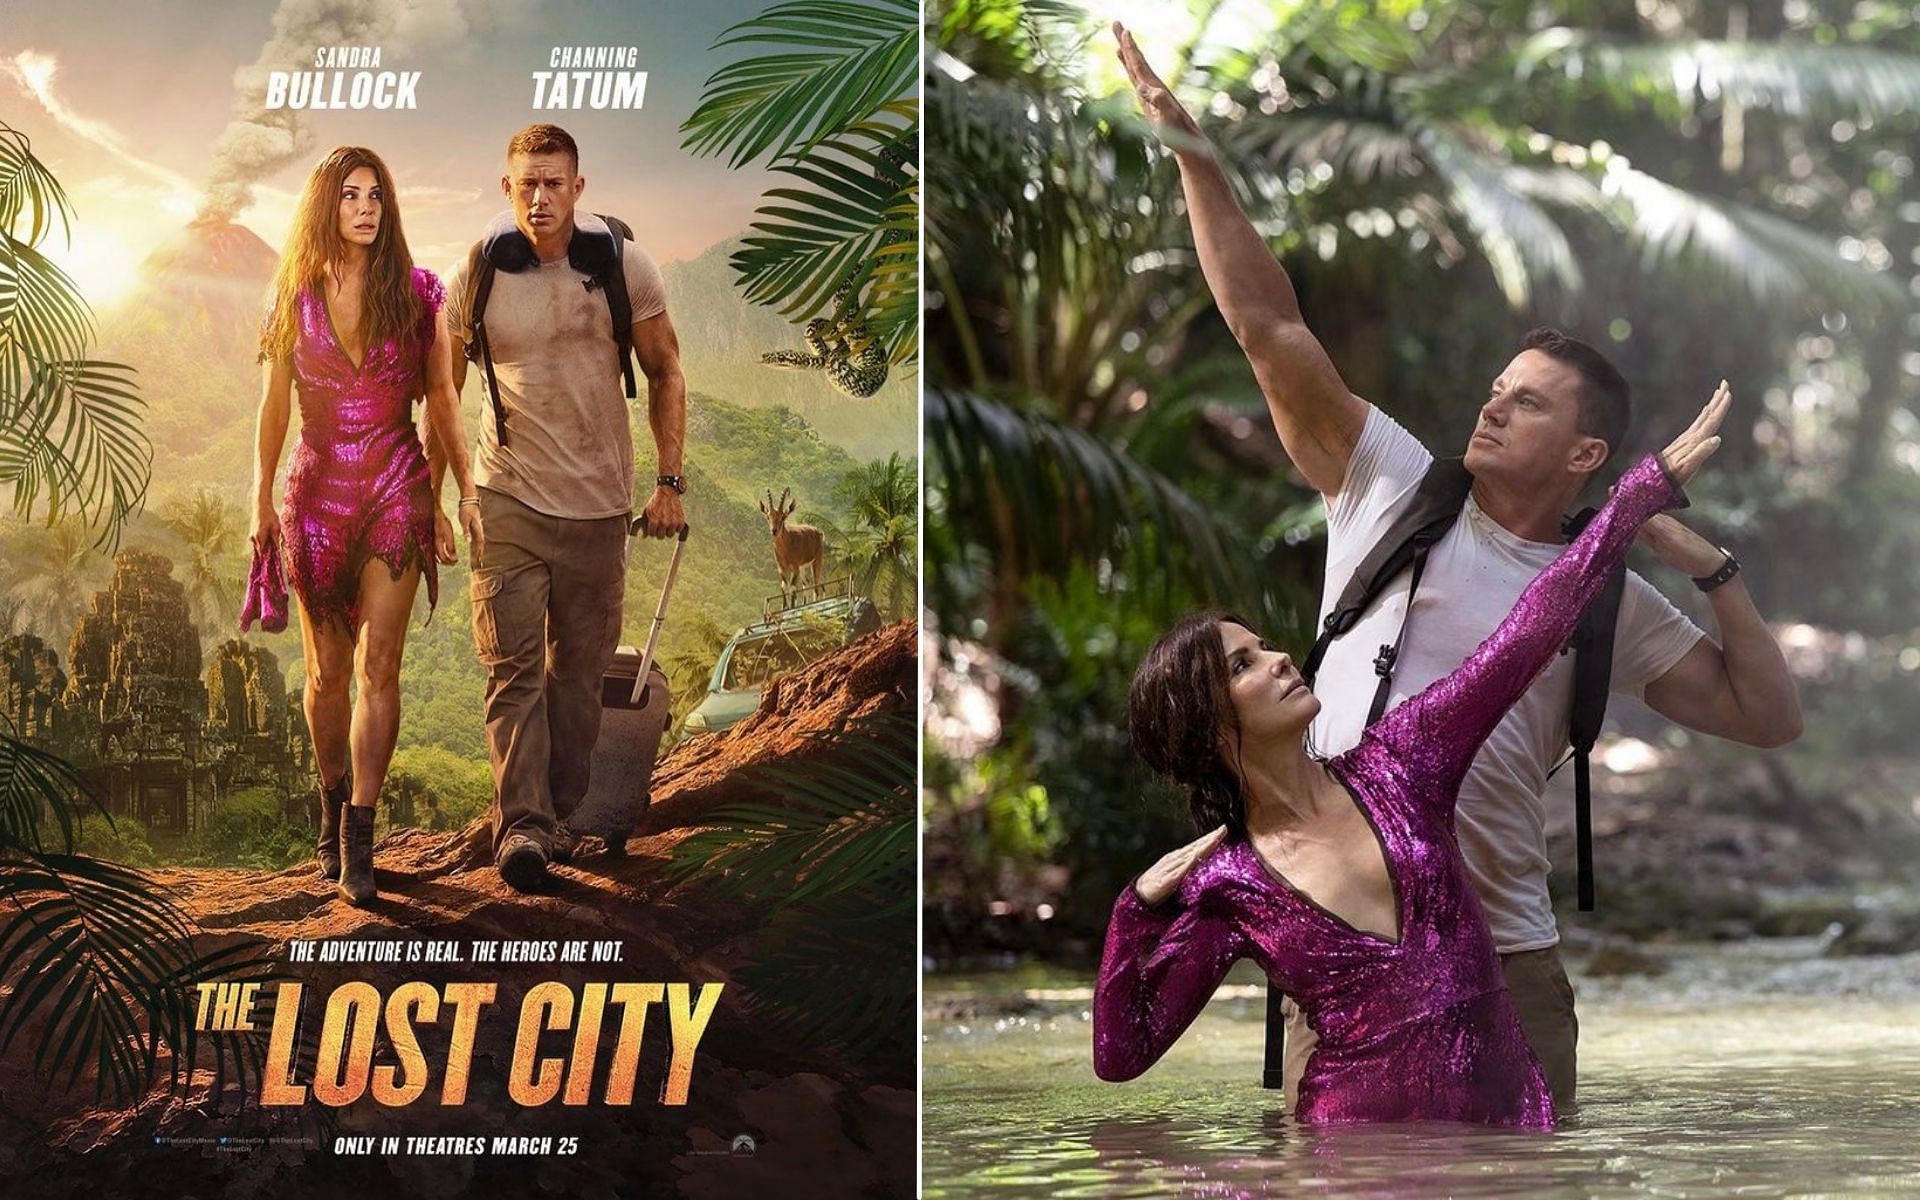 Channing Tatum and Sandra Bullock starring in the adventure movie, The Lost City (Image via @lostcitymovie/Instagram)